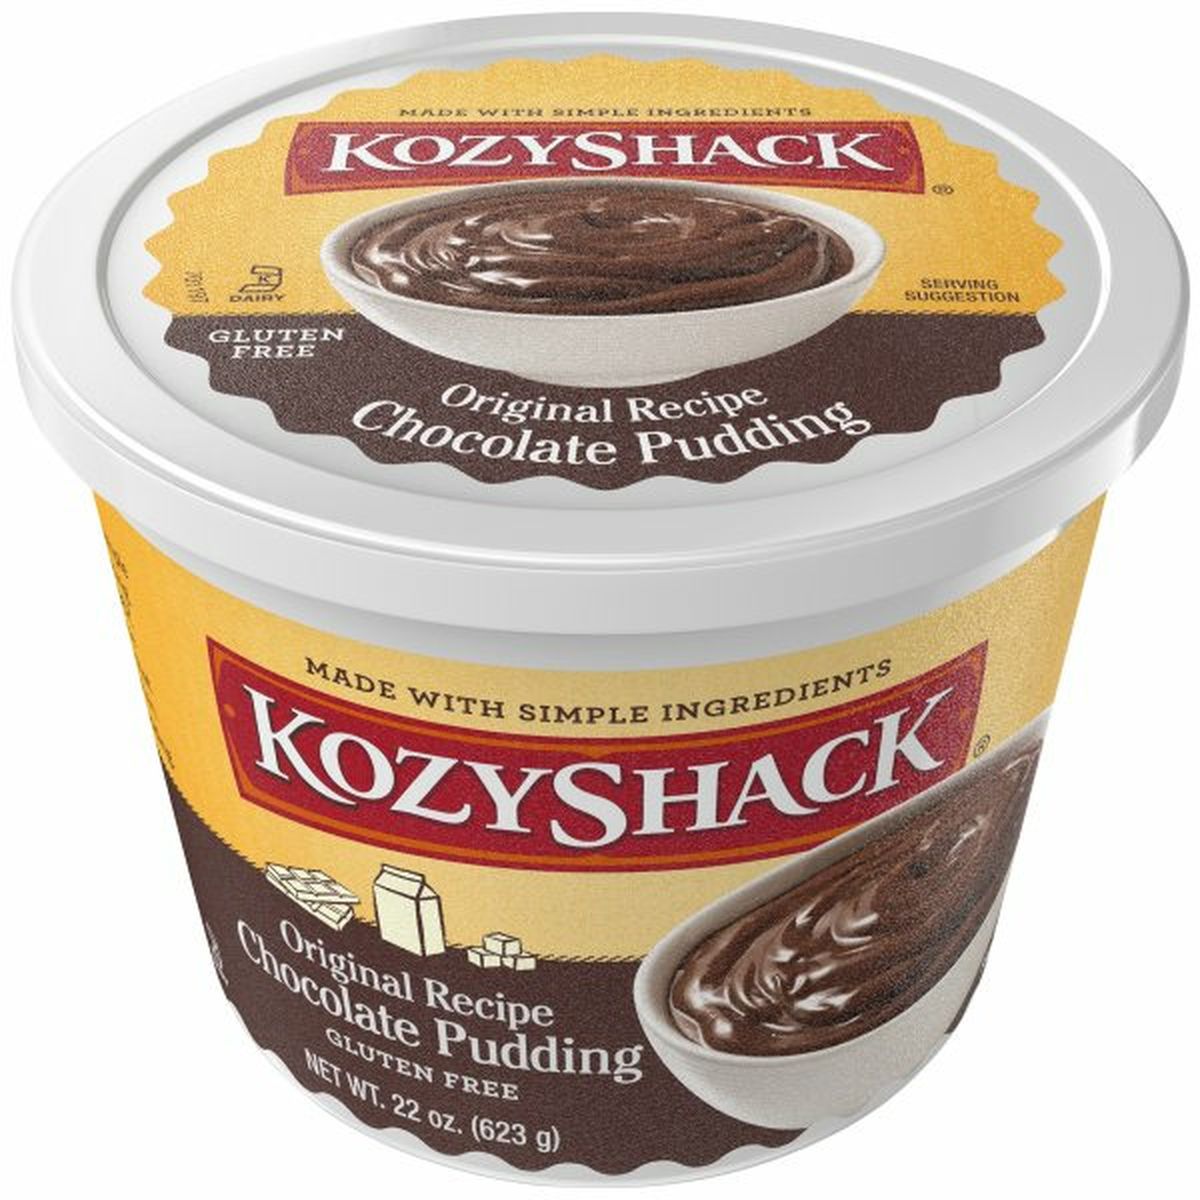 Calories in Kozy Shack Pudding, Chocolate, Gluten Free, Original Recipe